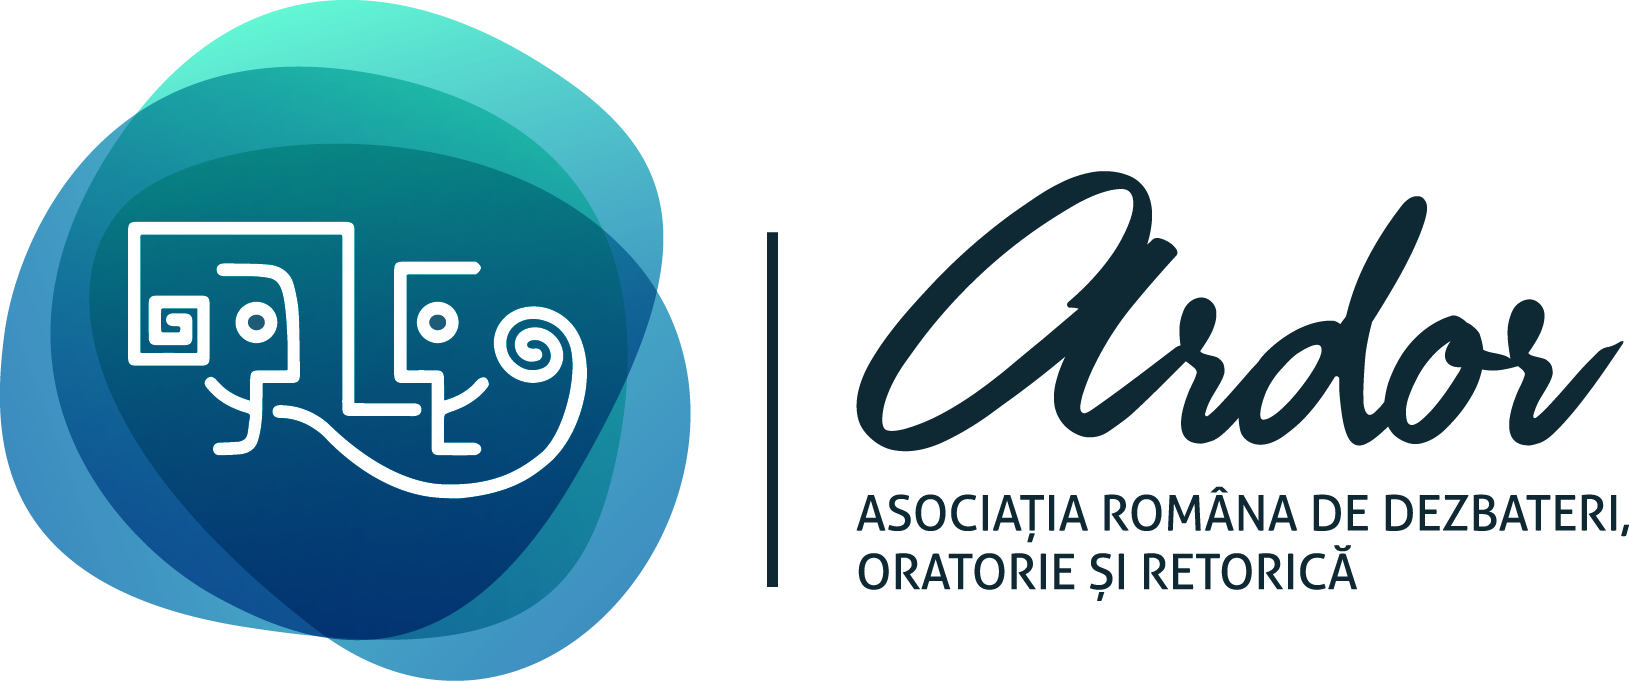 Asociatia Romana de Dezbateri, Oratorie si Retorica (ARDOR) logo